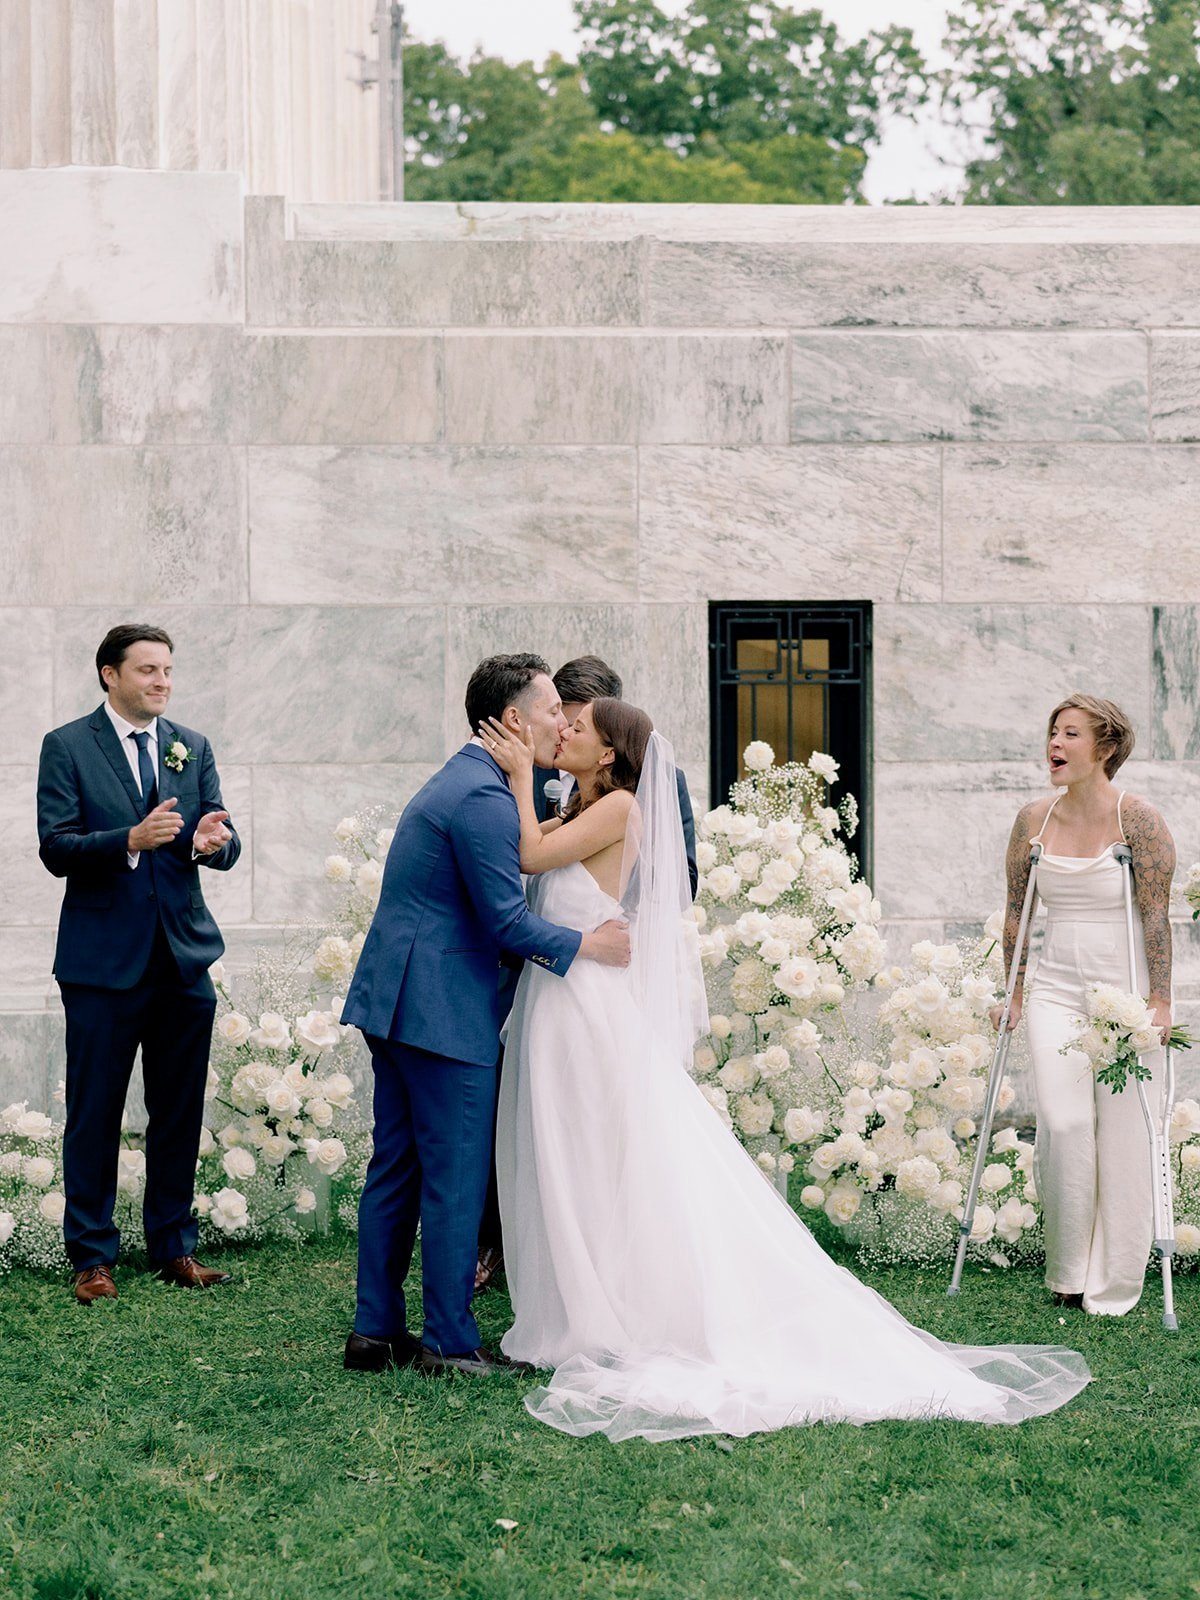 Best-Austin-Wedding-Photographers-Elopement-Film-35mm-Asheville-Santa-Barbara-1031.jpg